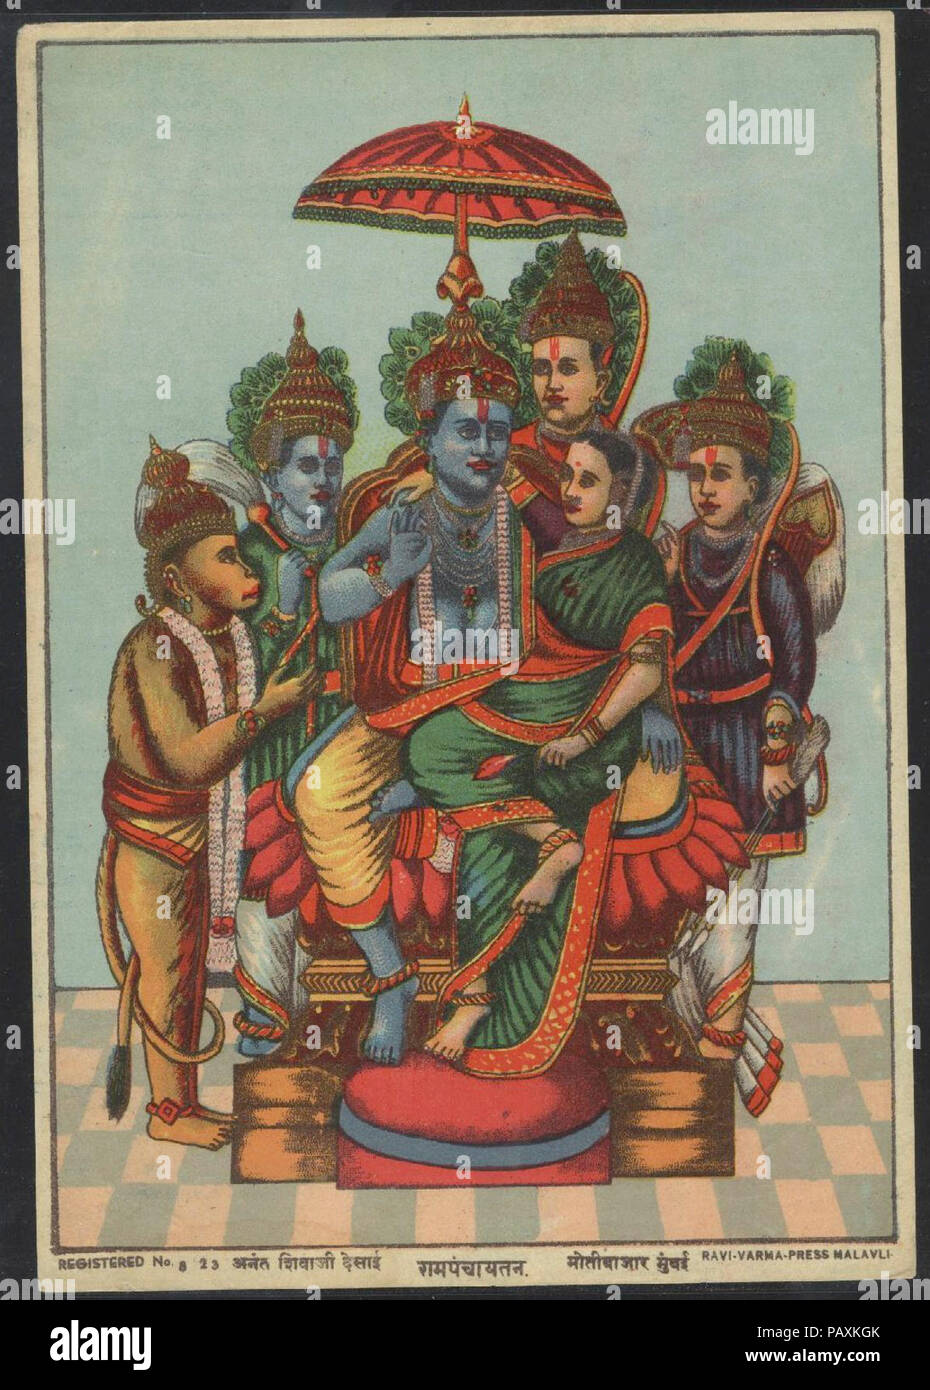 A version of the scene from the Raja Ravi Varma Press, c.1910's. Stock Photo